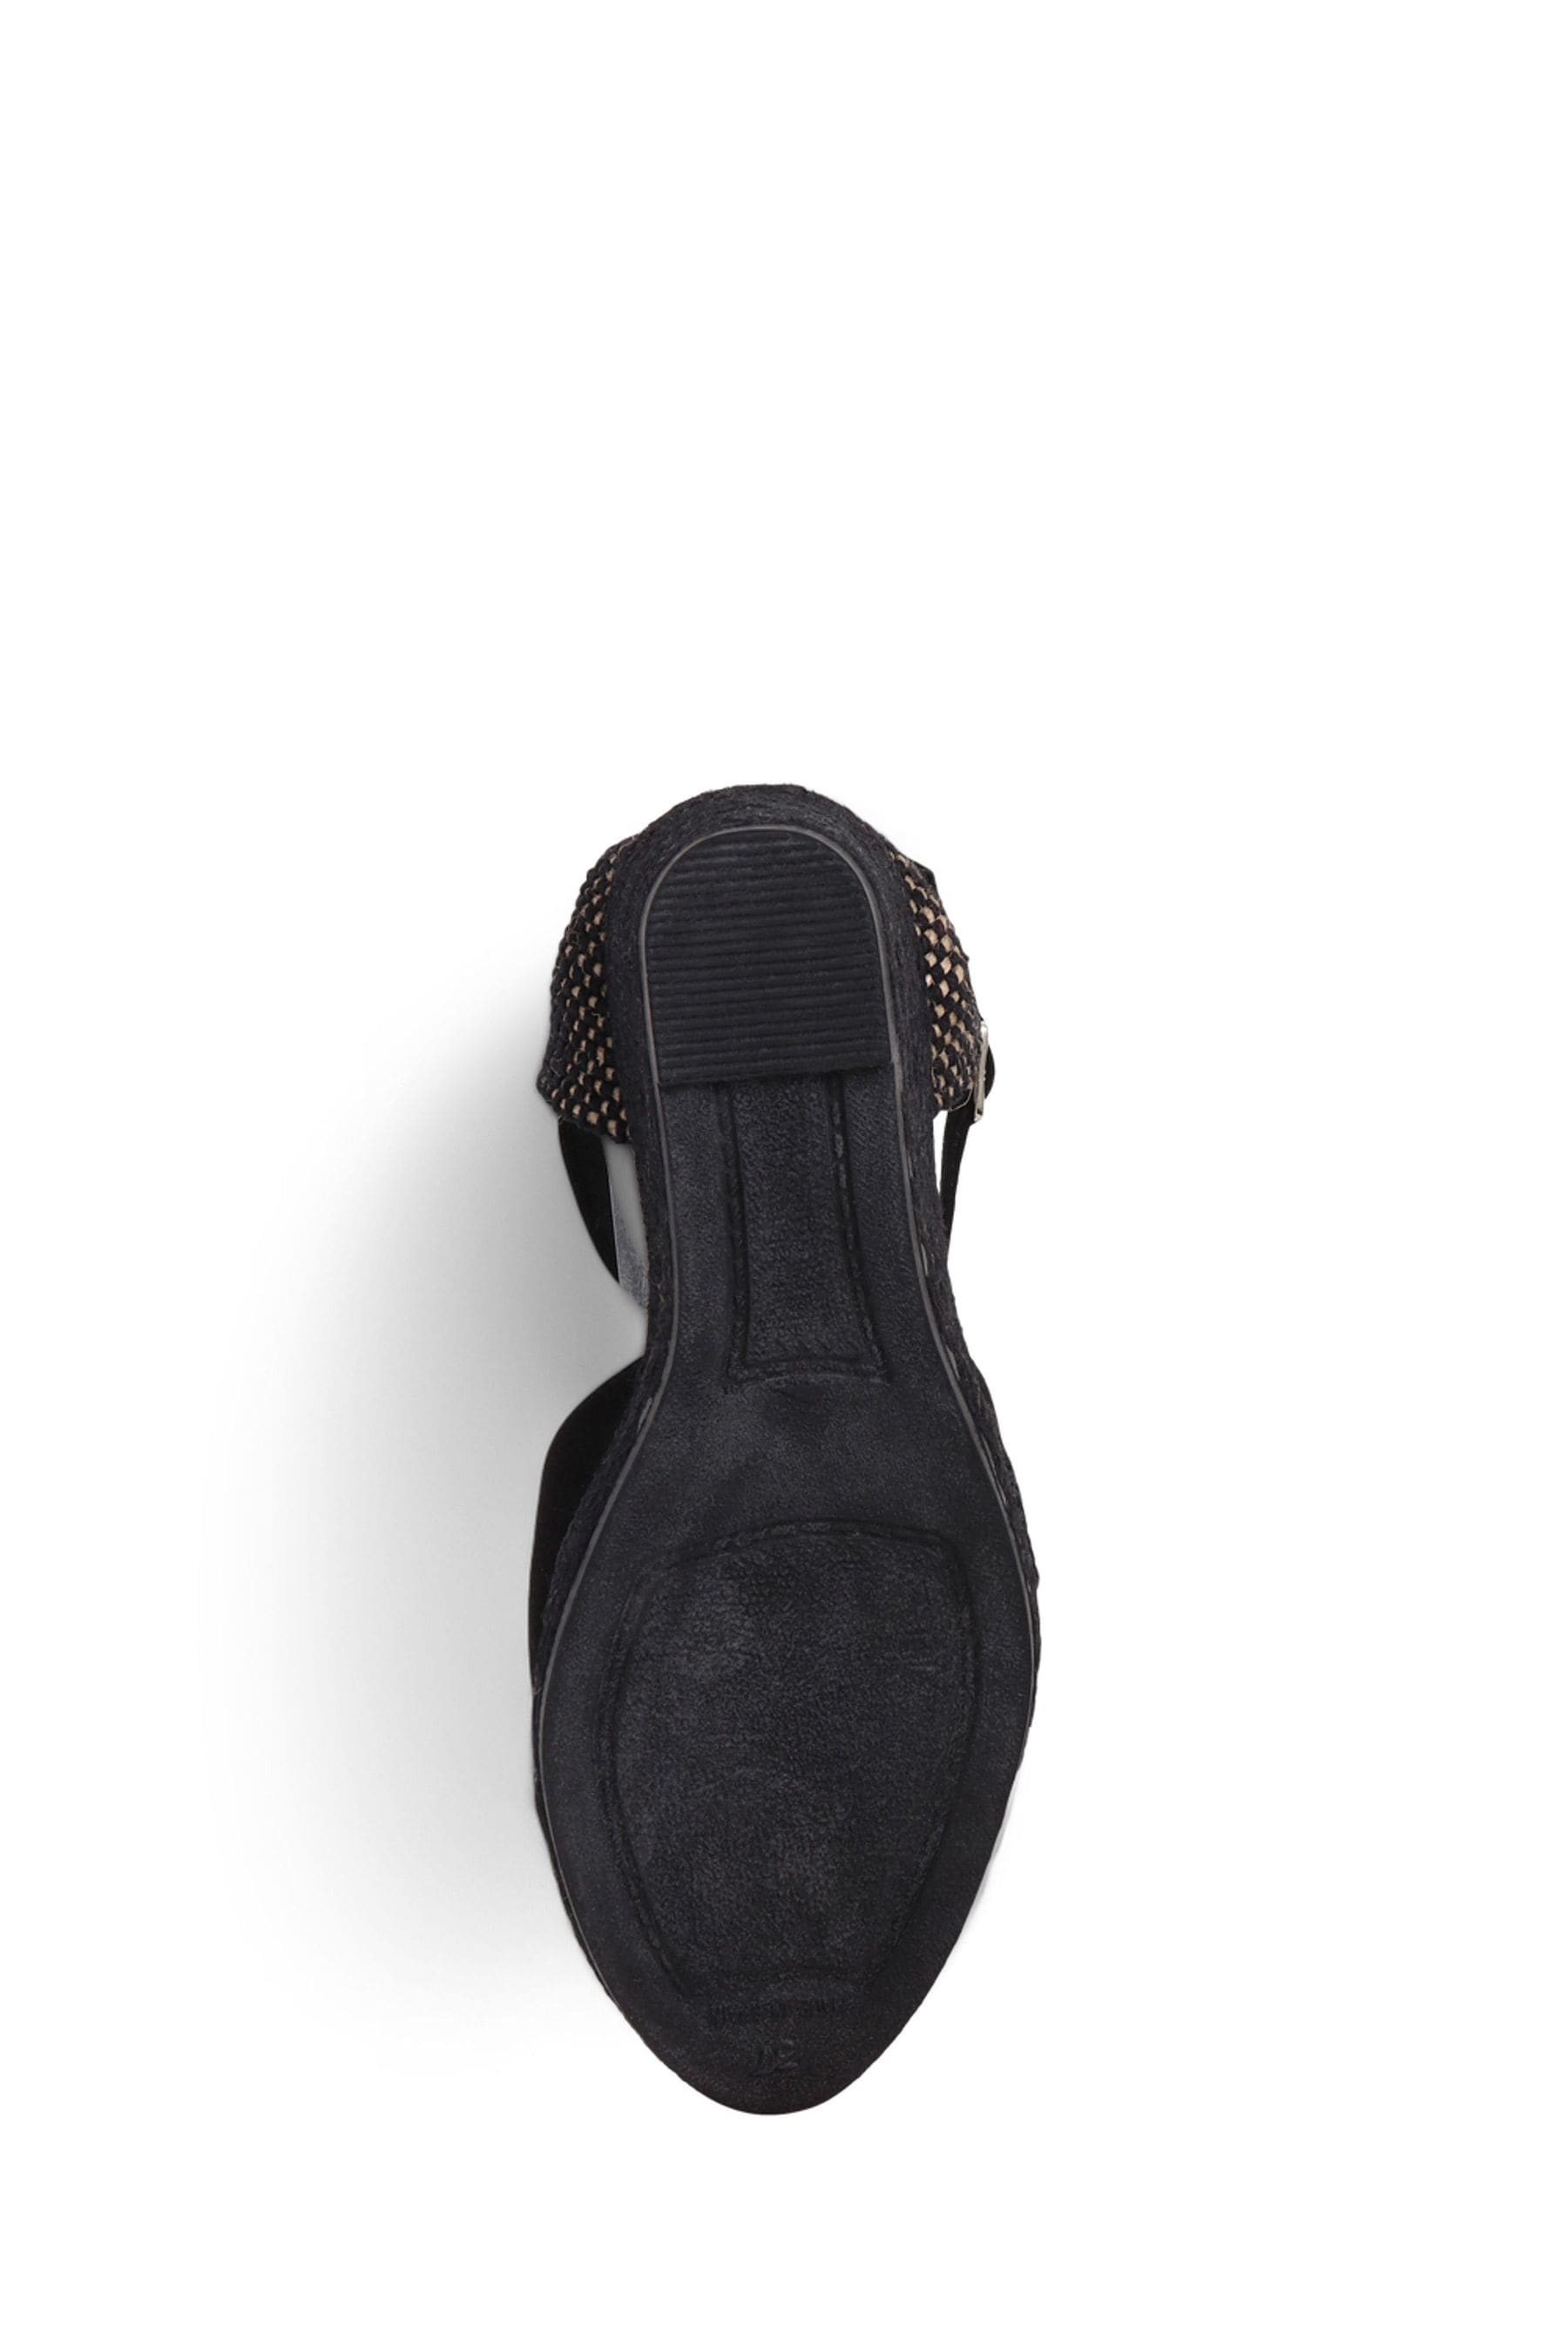 Buy Jones Bootmaker Black Arabella Ladies Leather Wedge Sandals from ...